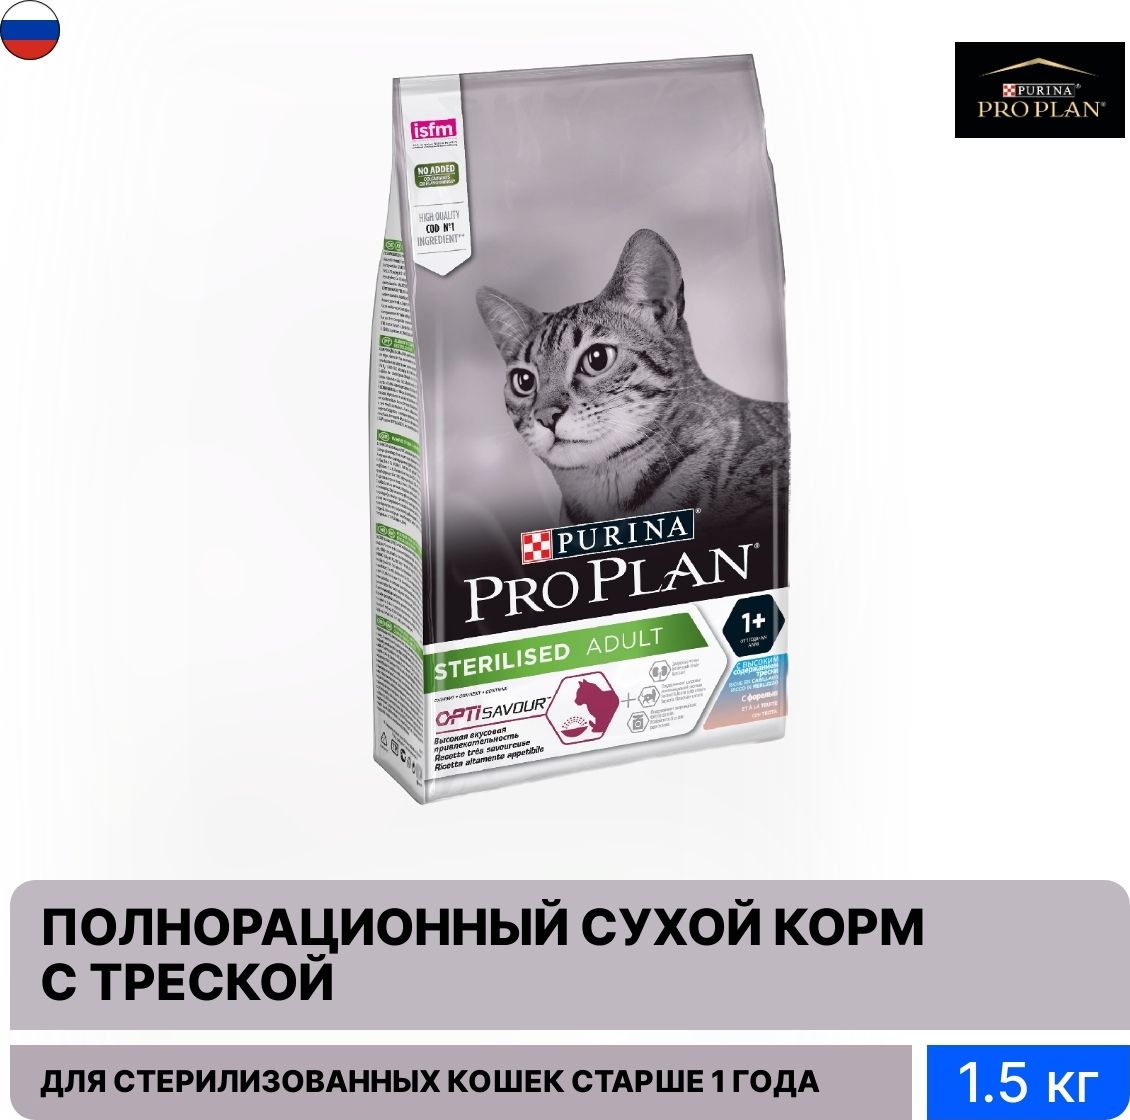 Pro plan для кошек стерилизованных 10. Purina Pro Plan реклама. Pro Plan Live Clear Sterilized 1,4. Purina PROPLAN Baner. Реклама корма Пурина.